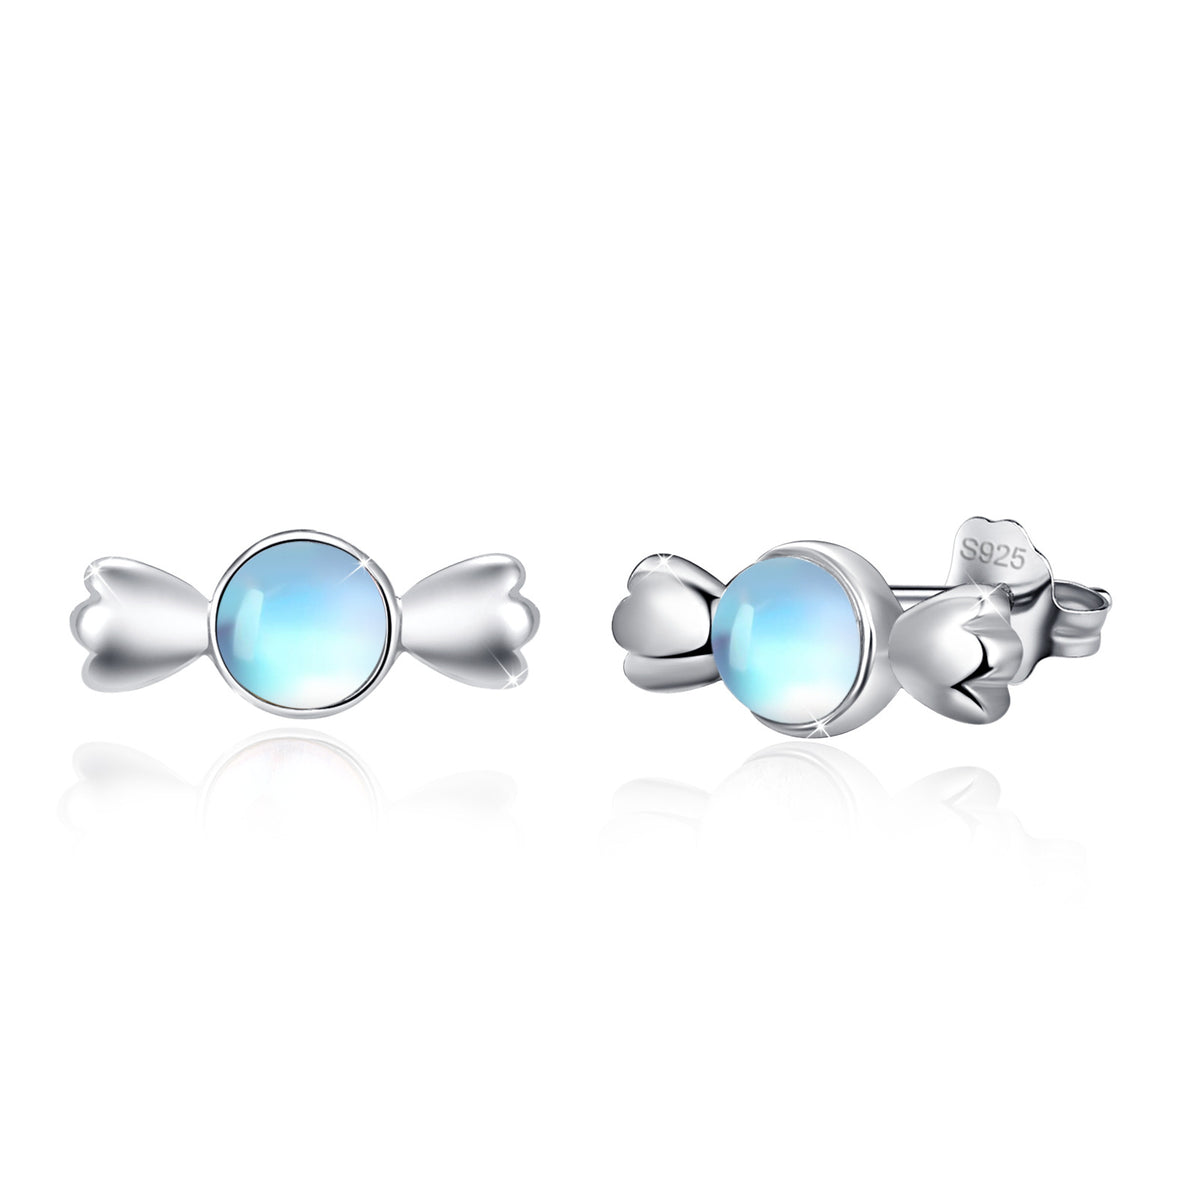 Moonstone Kids Stud Earrings 925 Sterling Silver Candy Earrings Jewelry Gift for Women Girls Daughter